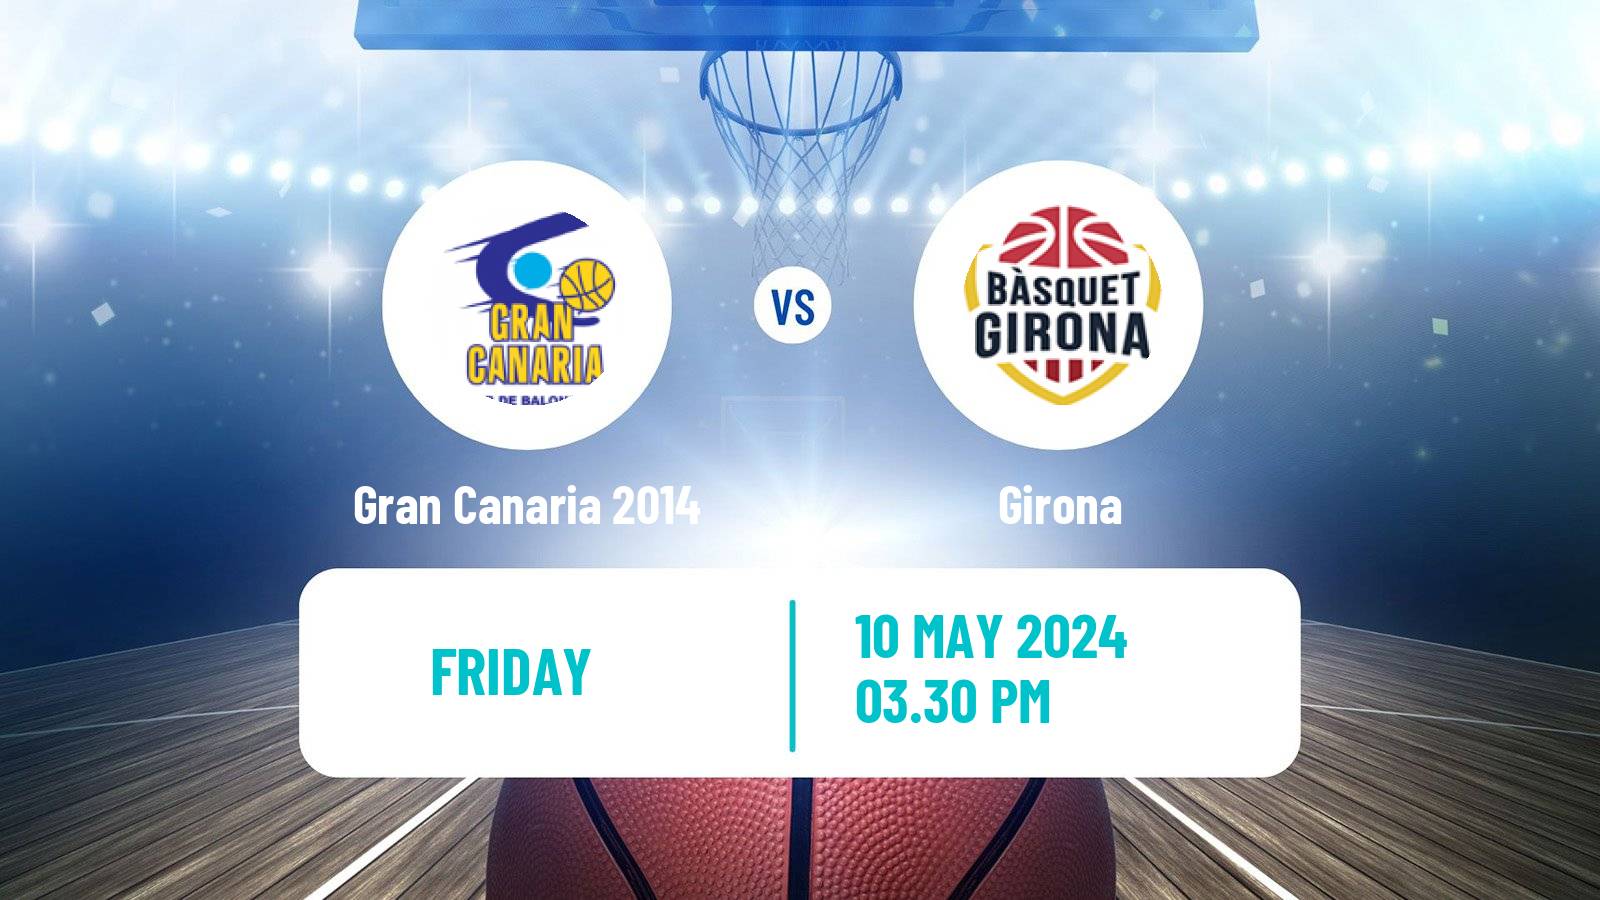 Basketball Spanish ACB League Gran Canaria 2014 - Girona